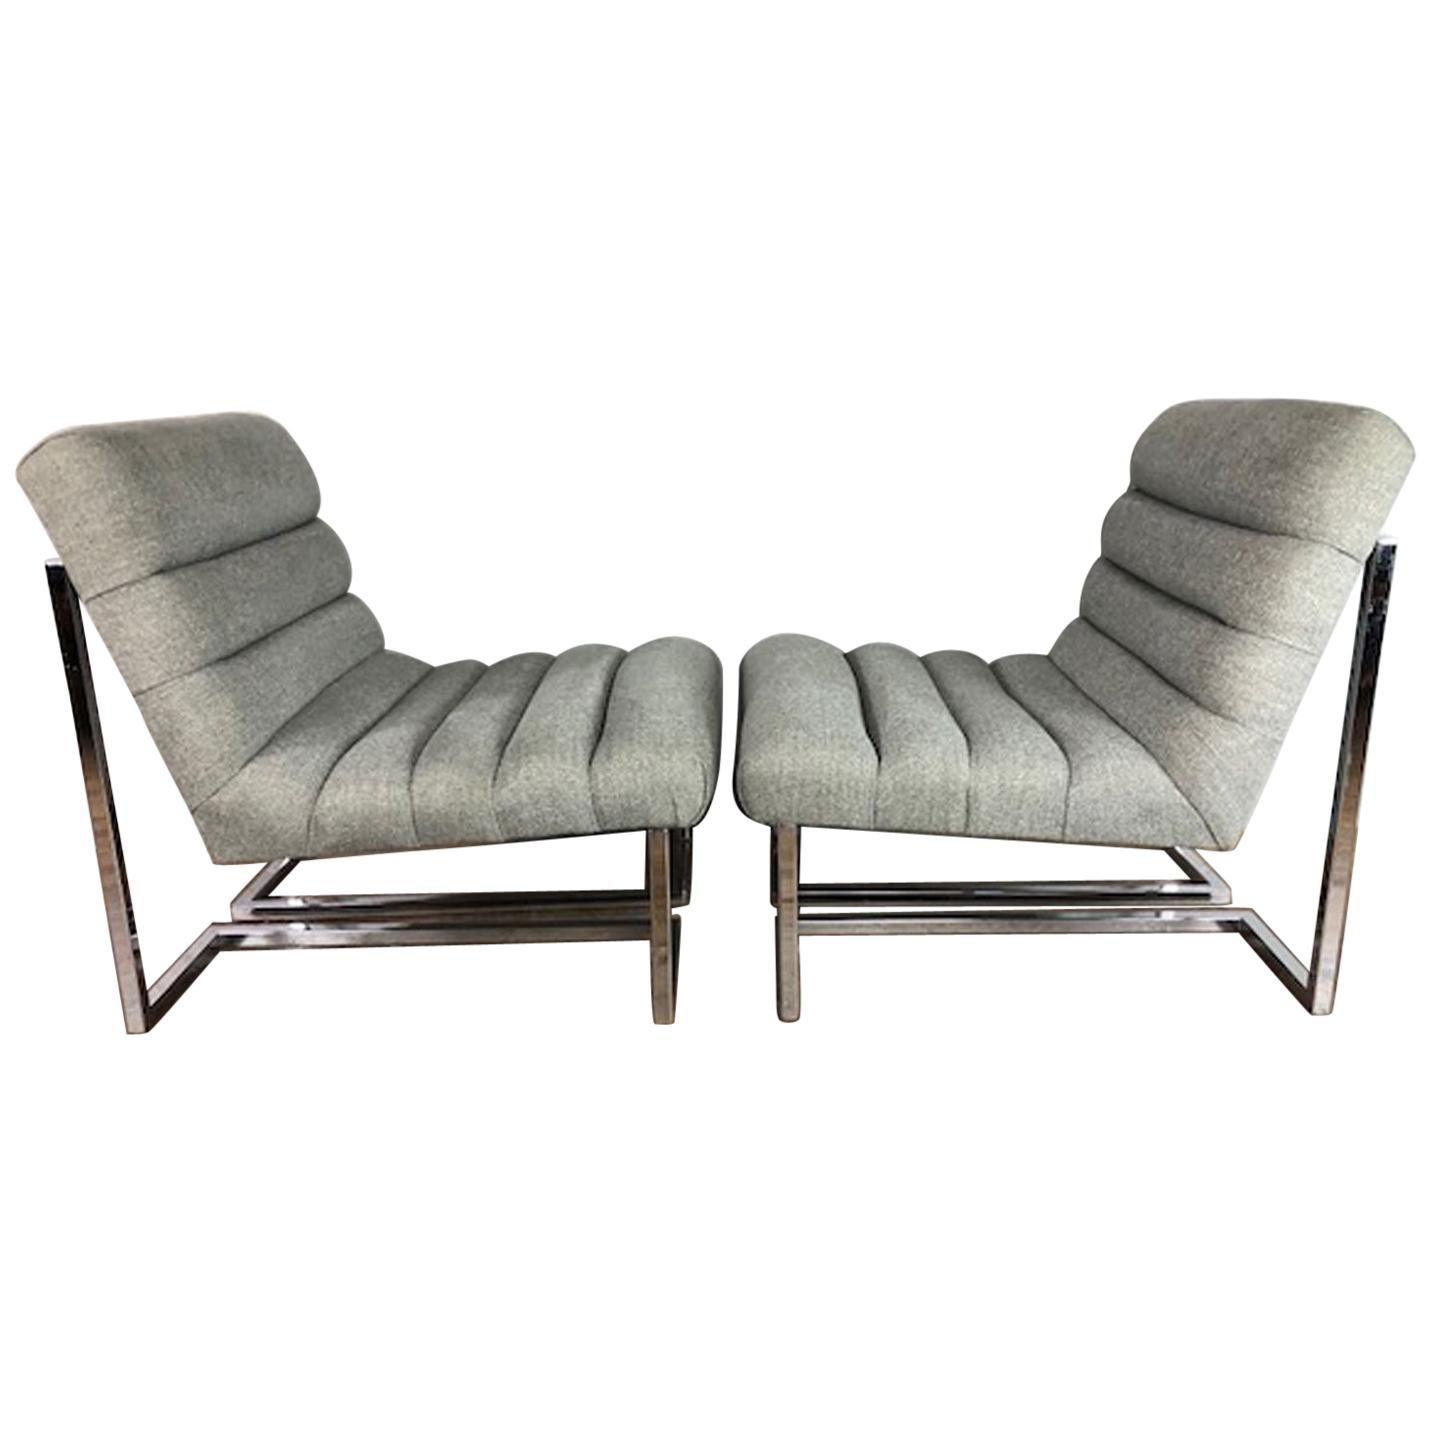 Swaim Design Lounge Chairs For Sale